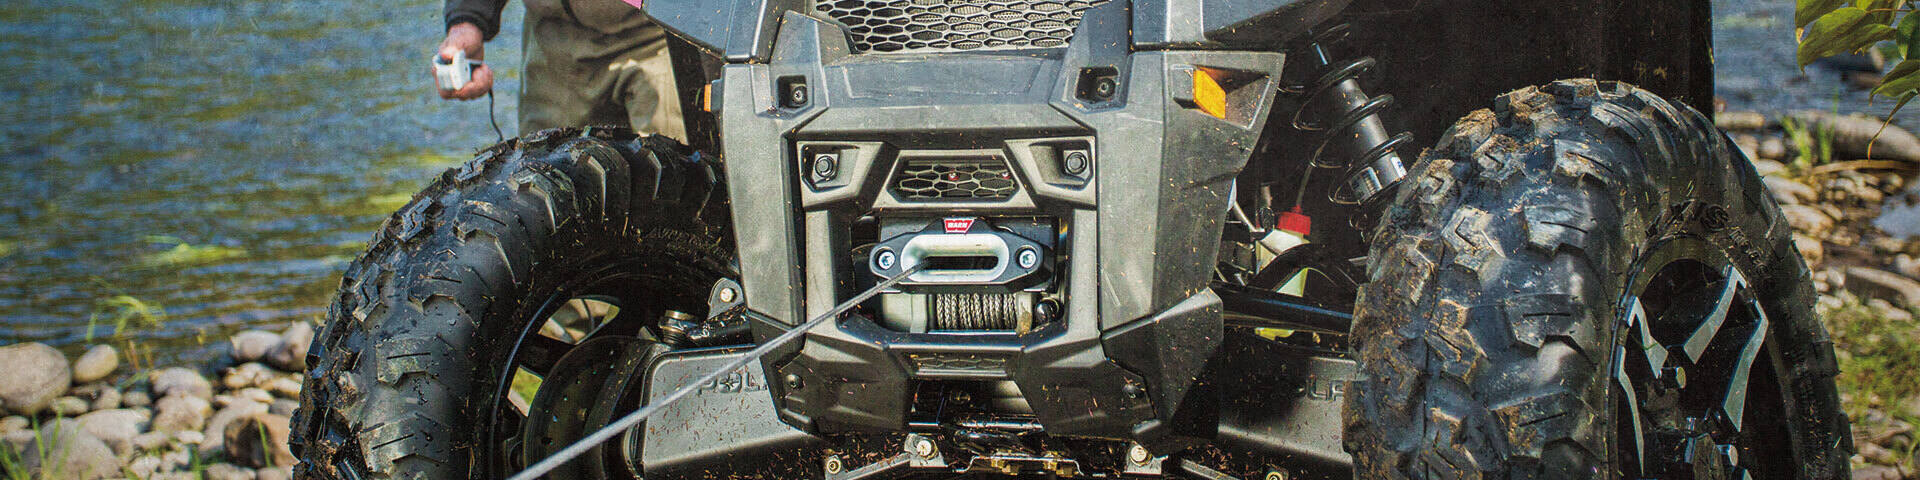 Astra Depot 50 x 1/4 Synthetic Winch Rope 6400LBs Protective Sleeve 40 Heat Guard for ATV UTV Truck 4x4 Ramsey KFI Black 